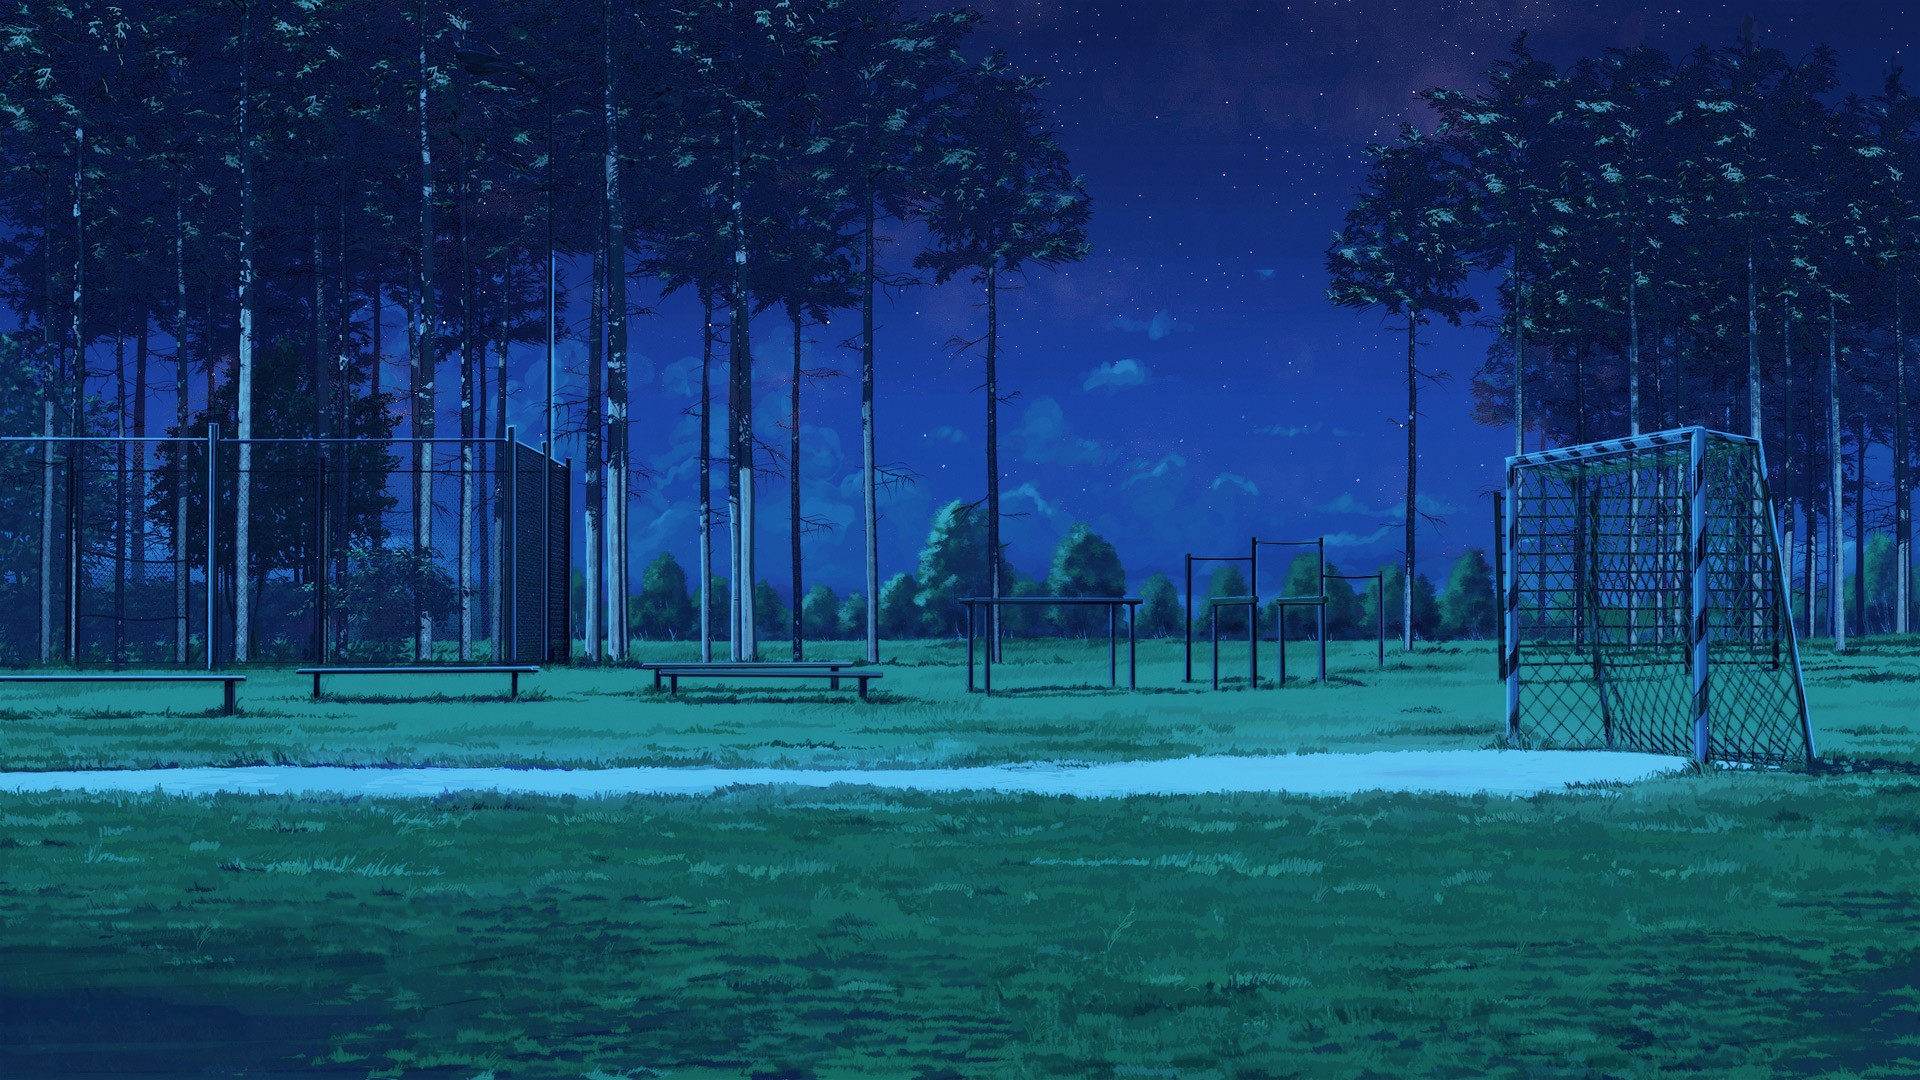 Anime Playground Background Night - 1920x1080 Wallpaper 